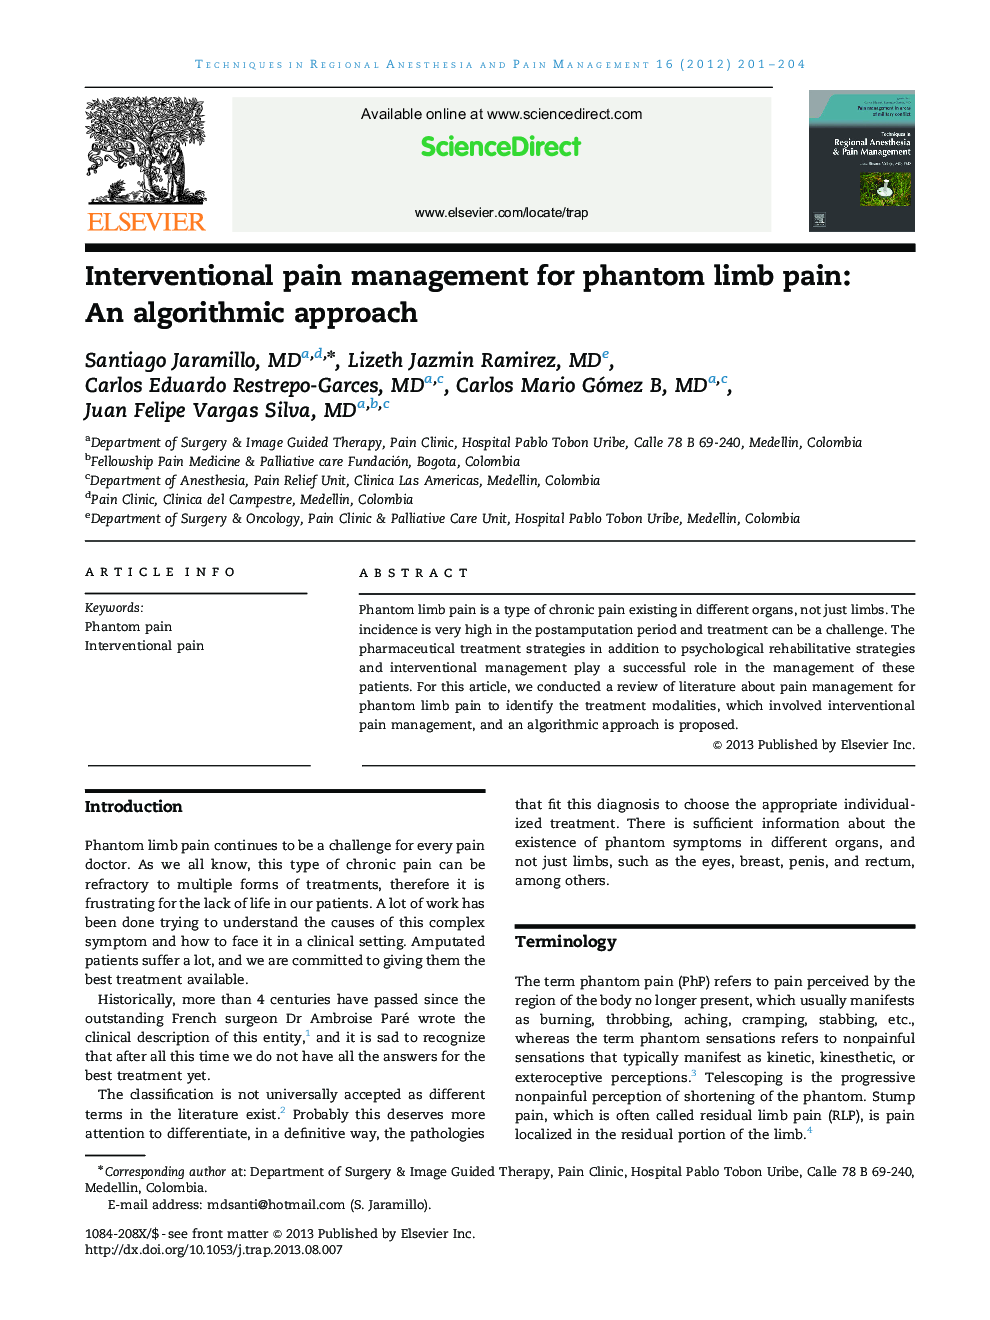 Interventional pain management for phantom limb pain: An algorithmic approach